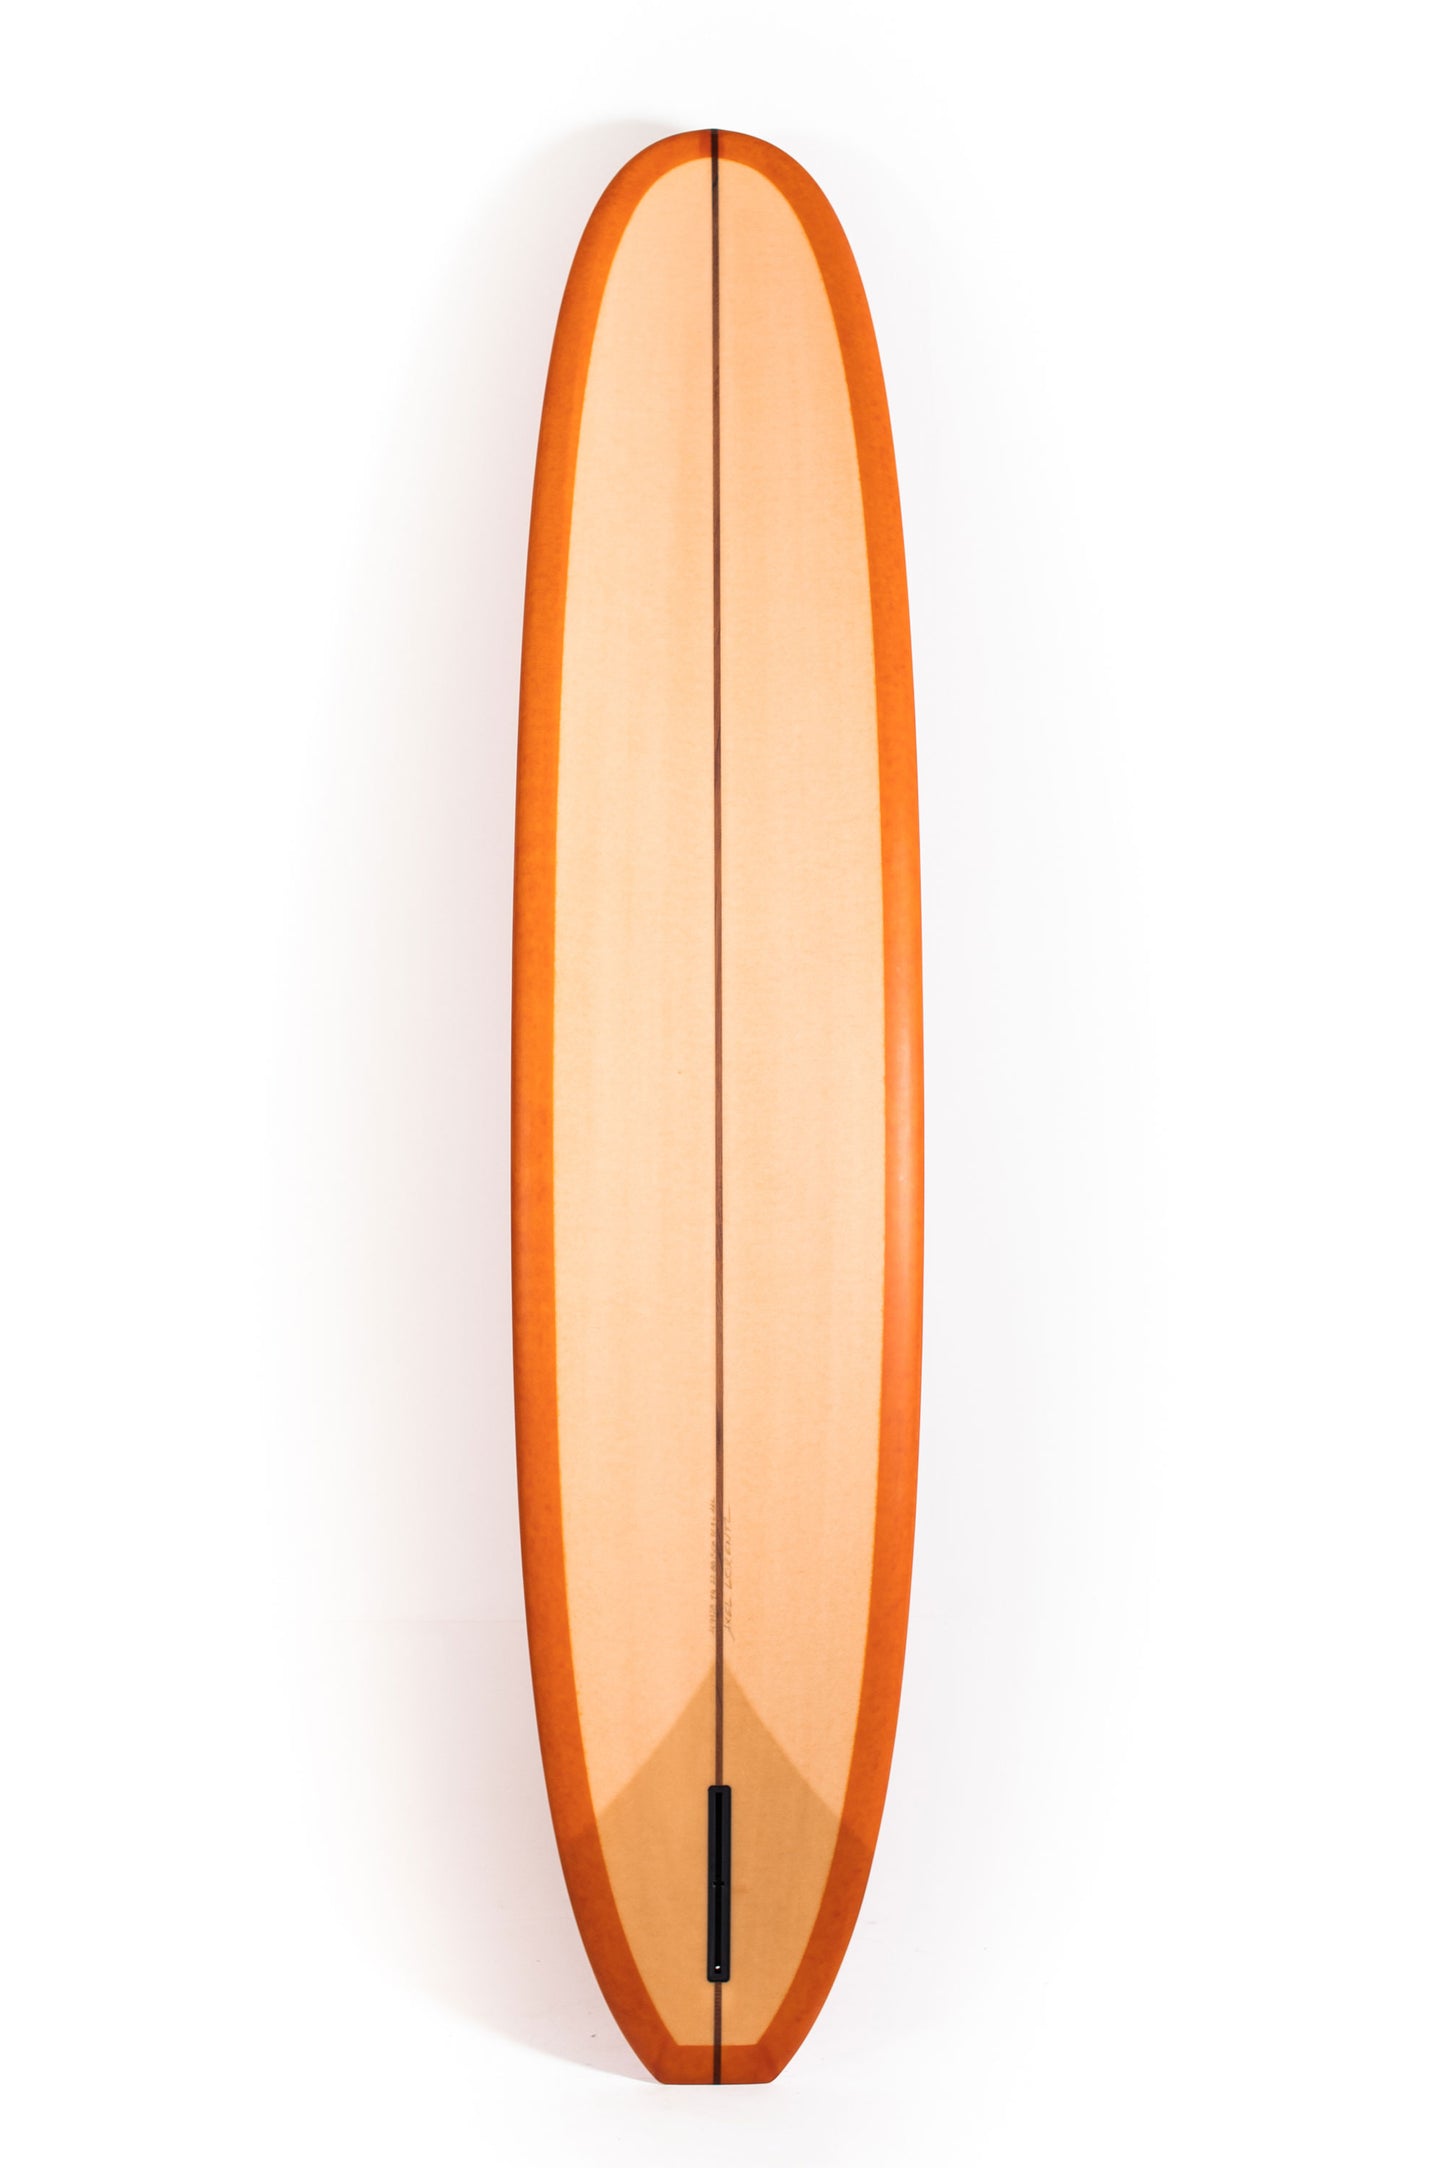 Pukas Surf Shop - Pukas Surfboards - MAYFLOWER by Axel Lorentz -  9'4" x 22,88 x 3,06 x 76.71L - AX09728